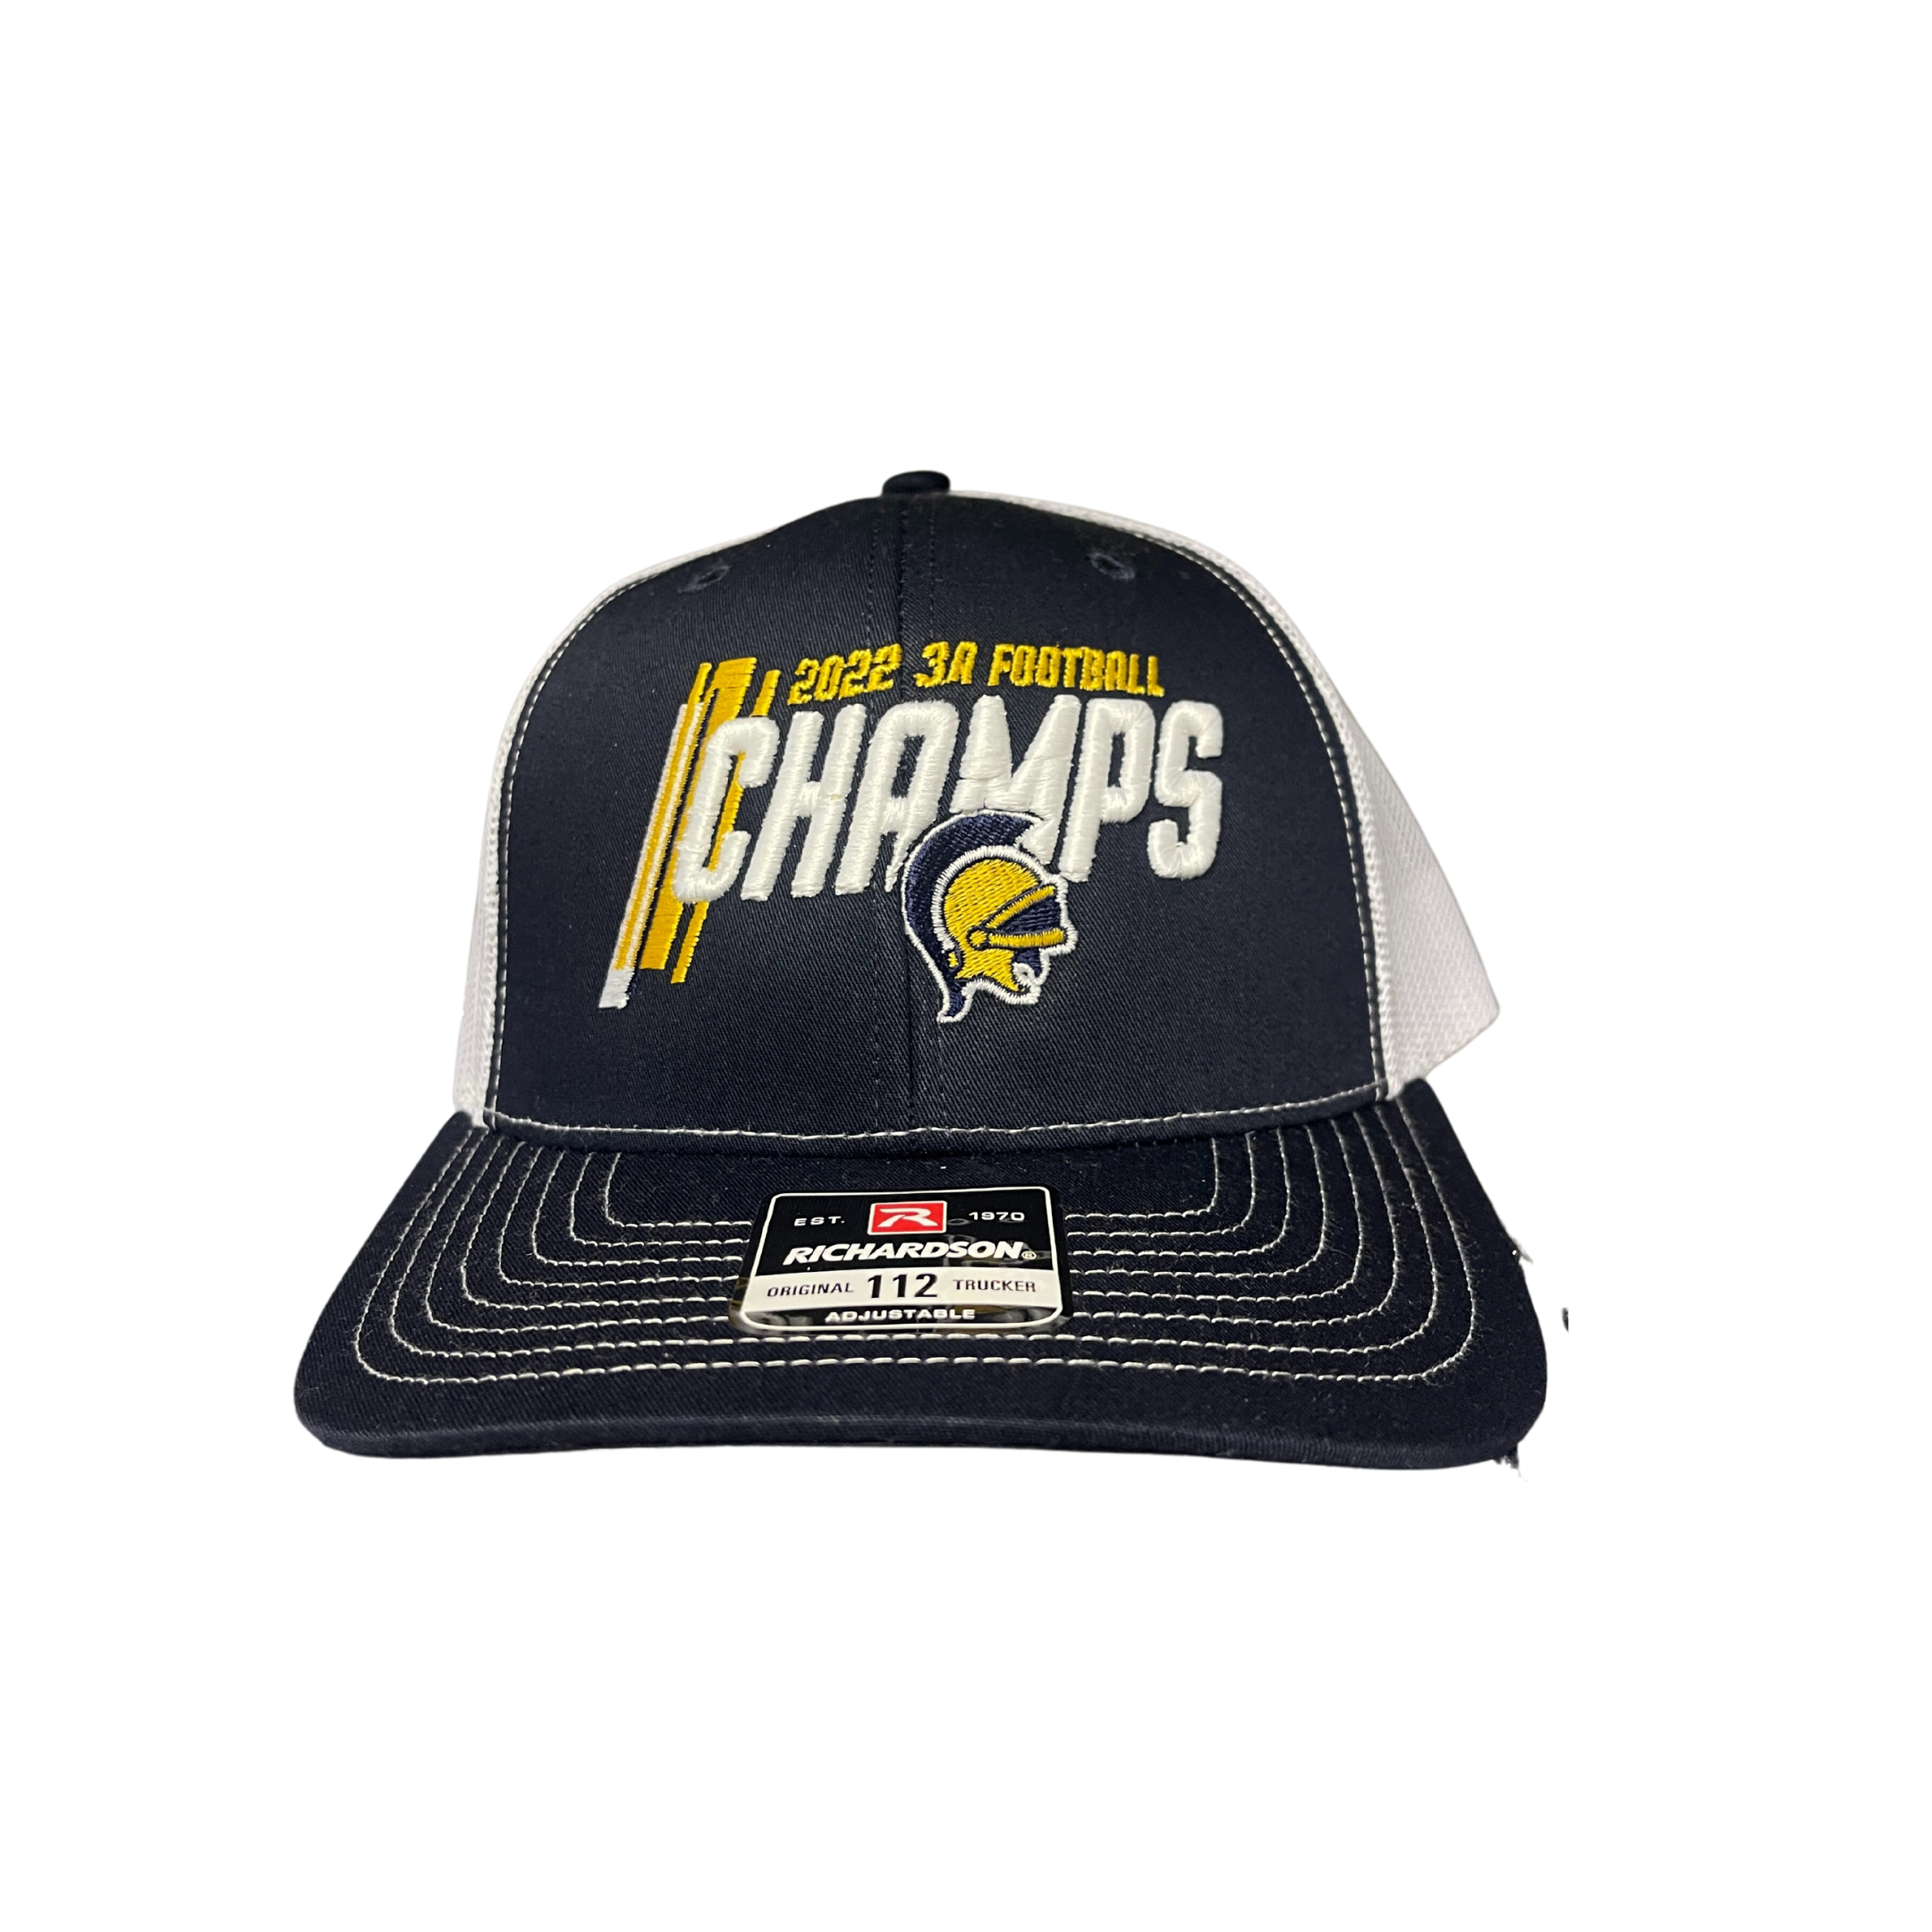 State Championship Trucker Hat